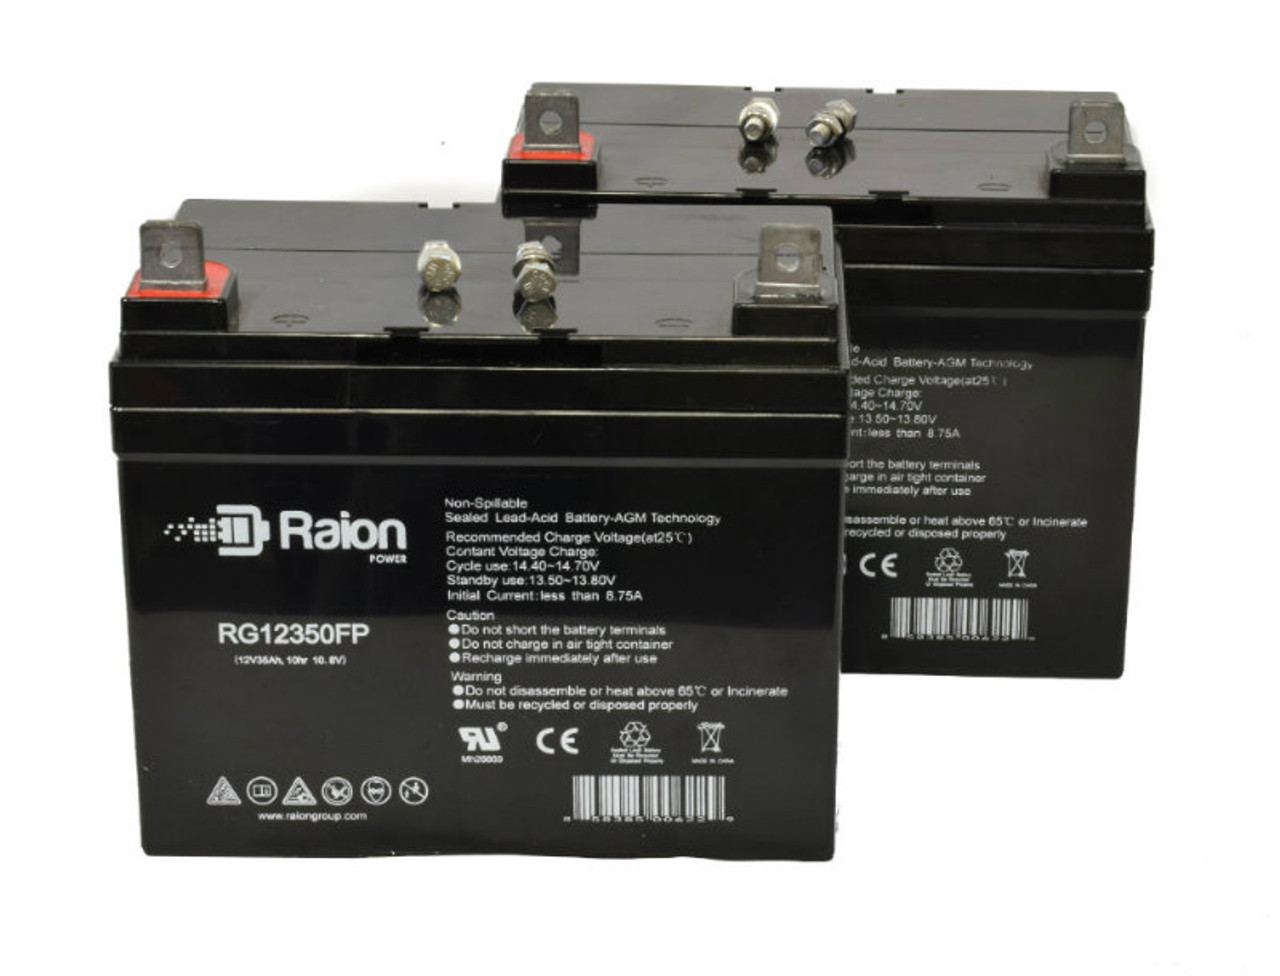 Raion Power Replacement 12V 35Ah Lawn Mower Battery for Heilman Enterprises 8-76 - 2 Pack